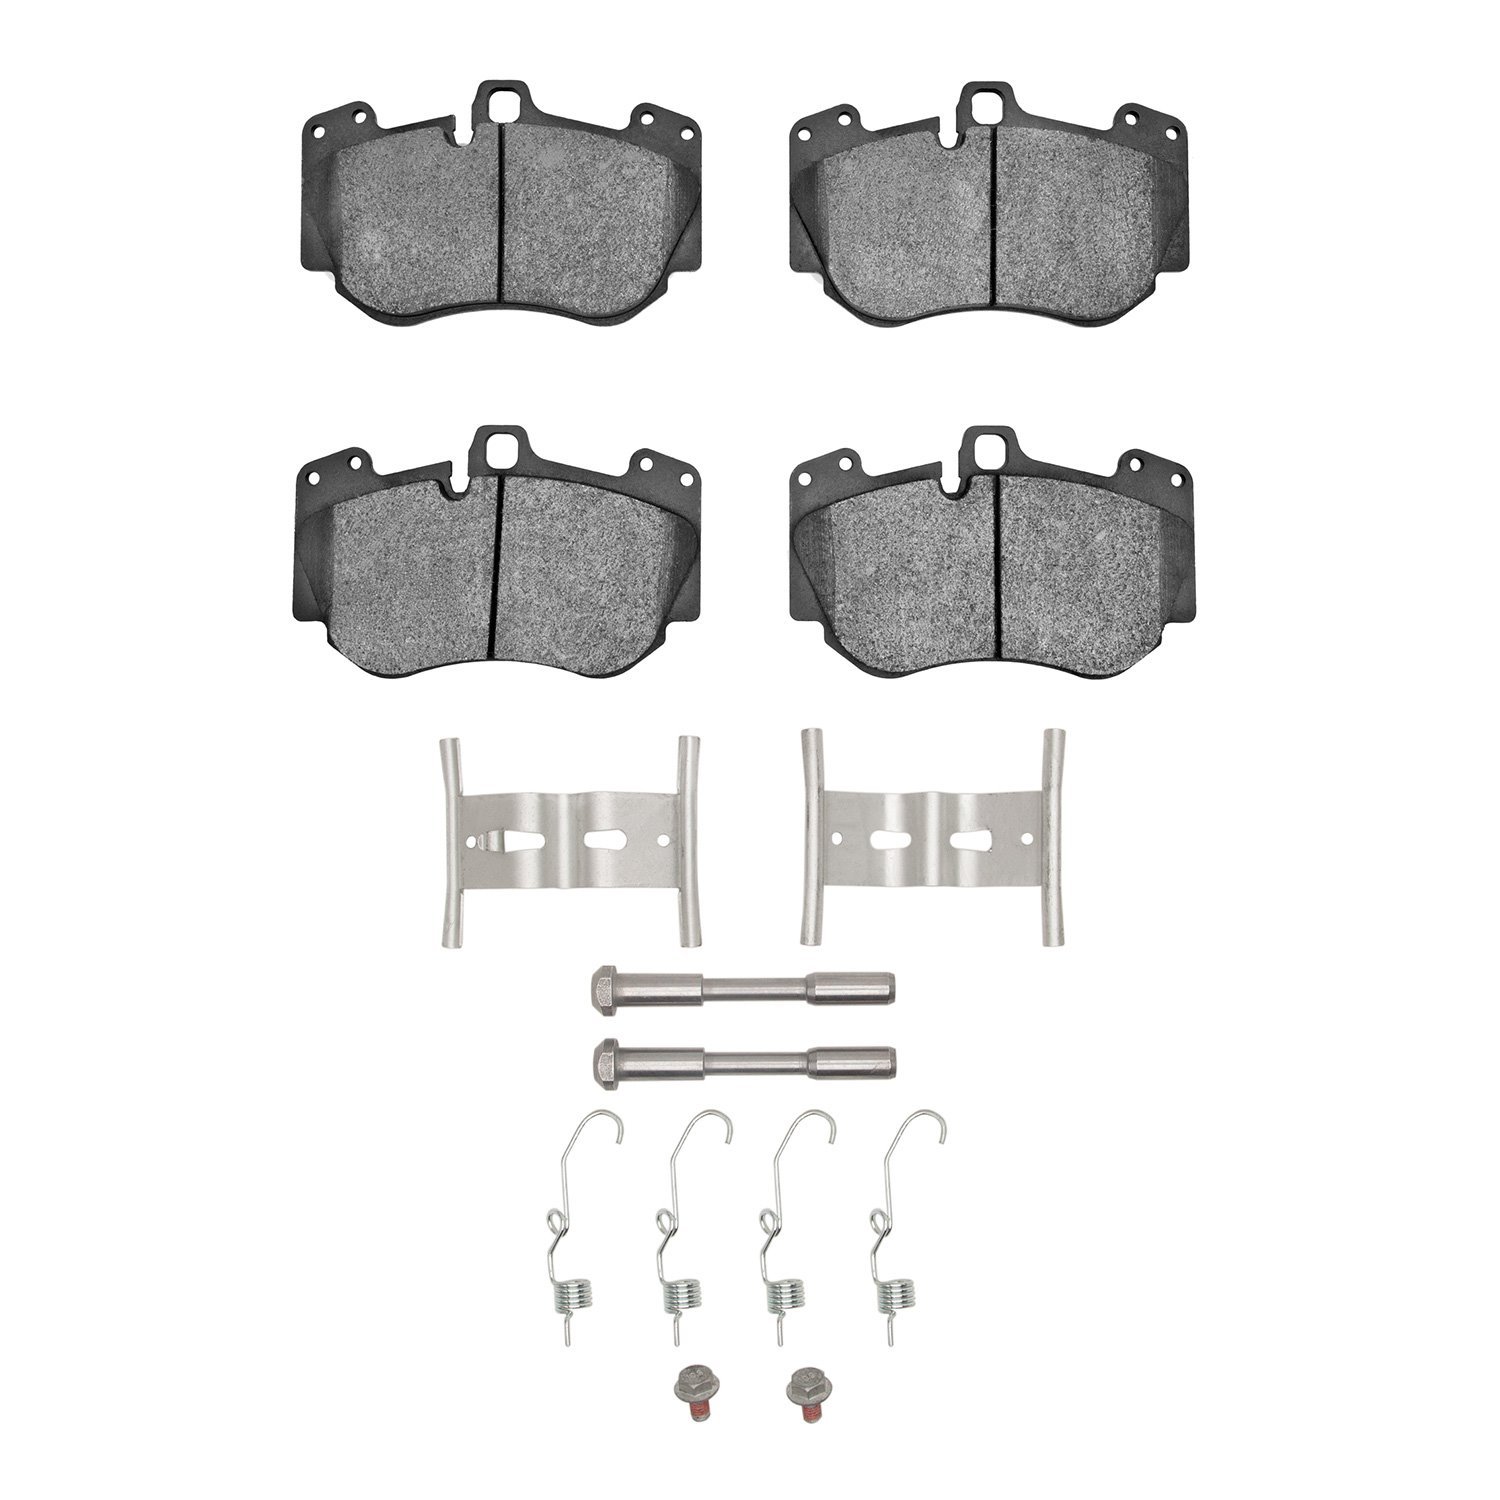 1311-1130-11 3000-Series Semi-Metallic Brake Pads & Hardware Kit, Fits Select Multiple Makes/Models, Position: Front